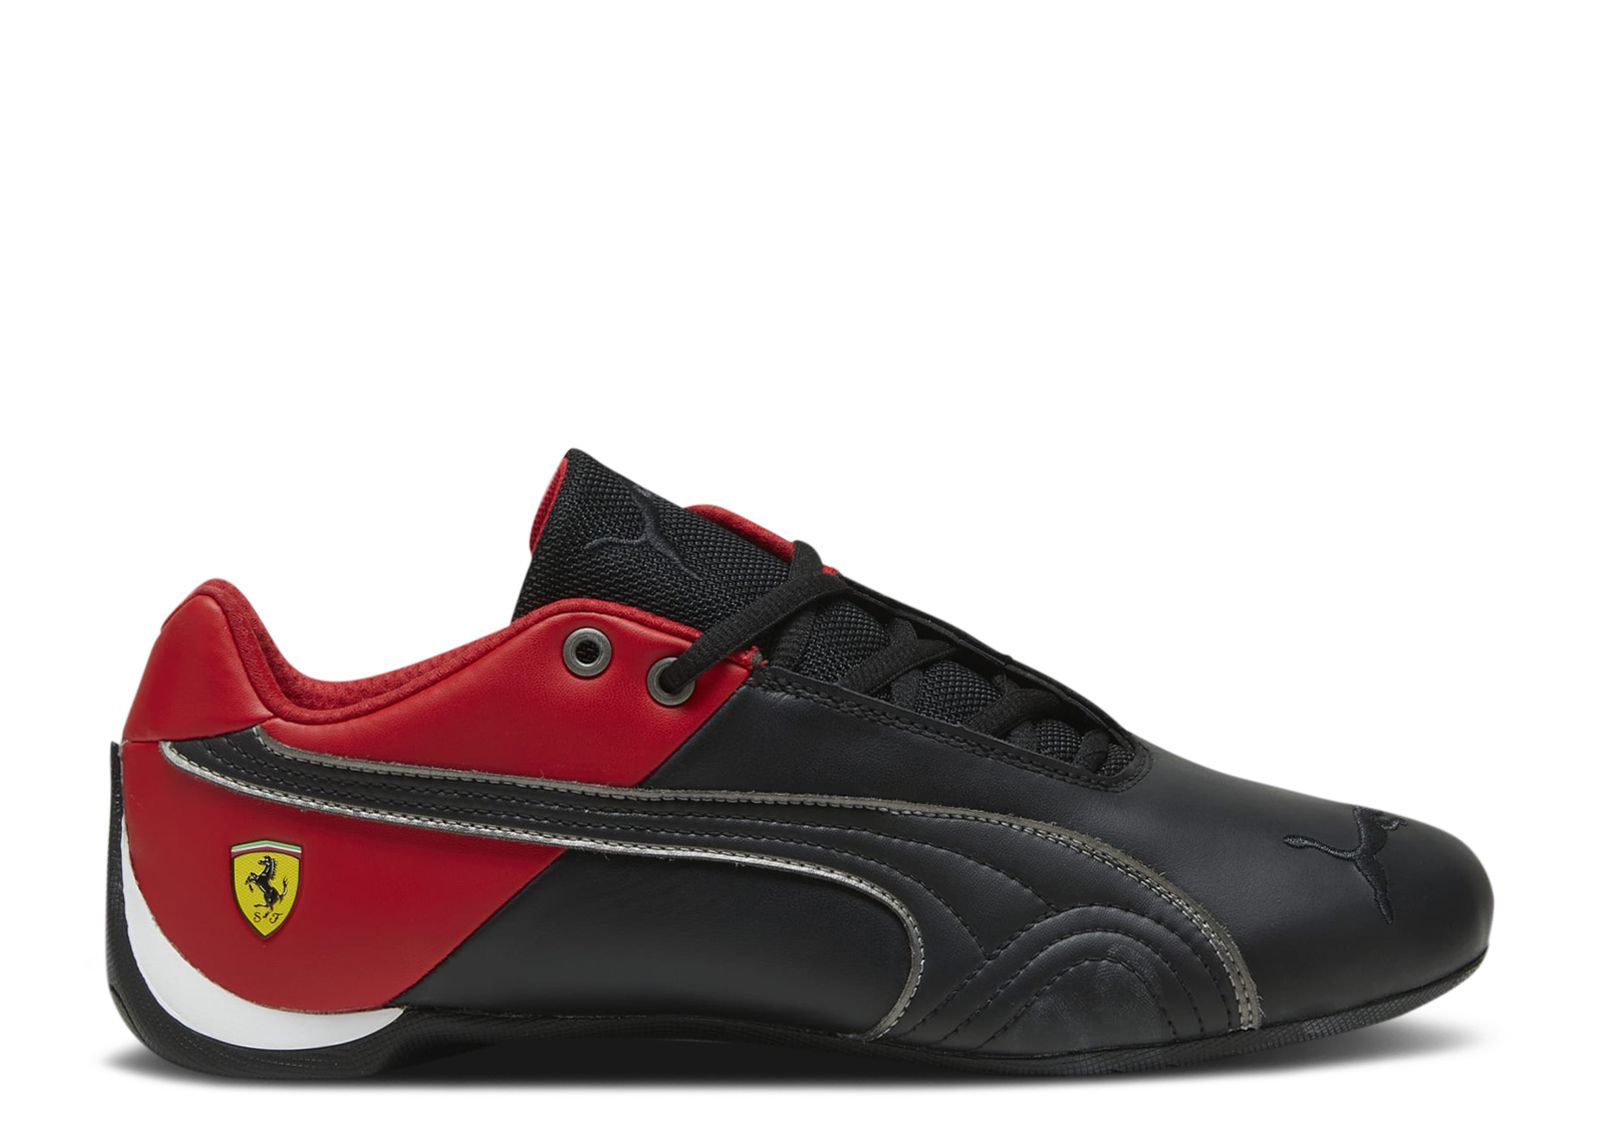 Кроссовки Puma Scuderia Ferrari X Future Cat Og 'Black Rosso Corsa', черный низкие кроссовки ferrari neo cat puma цвет rosso corsa rosso corsa